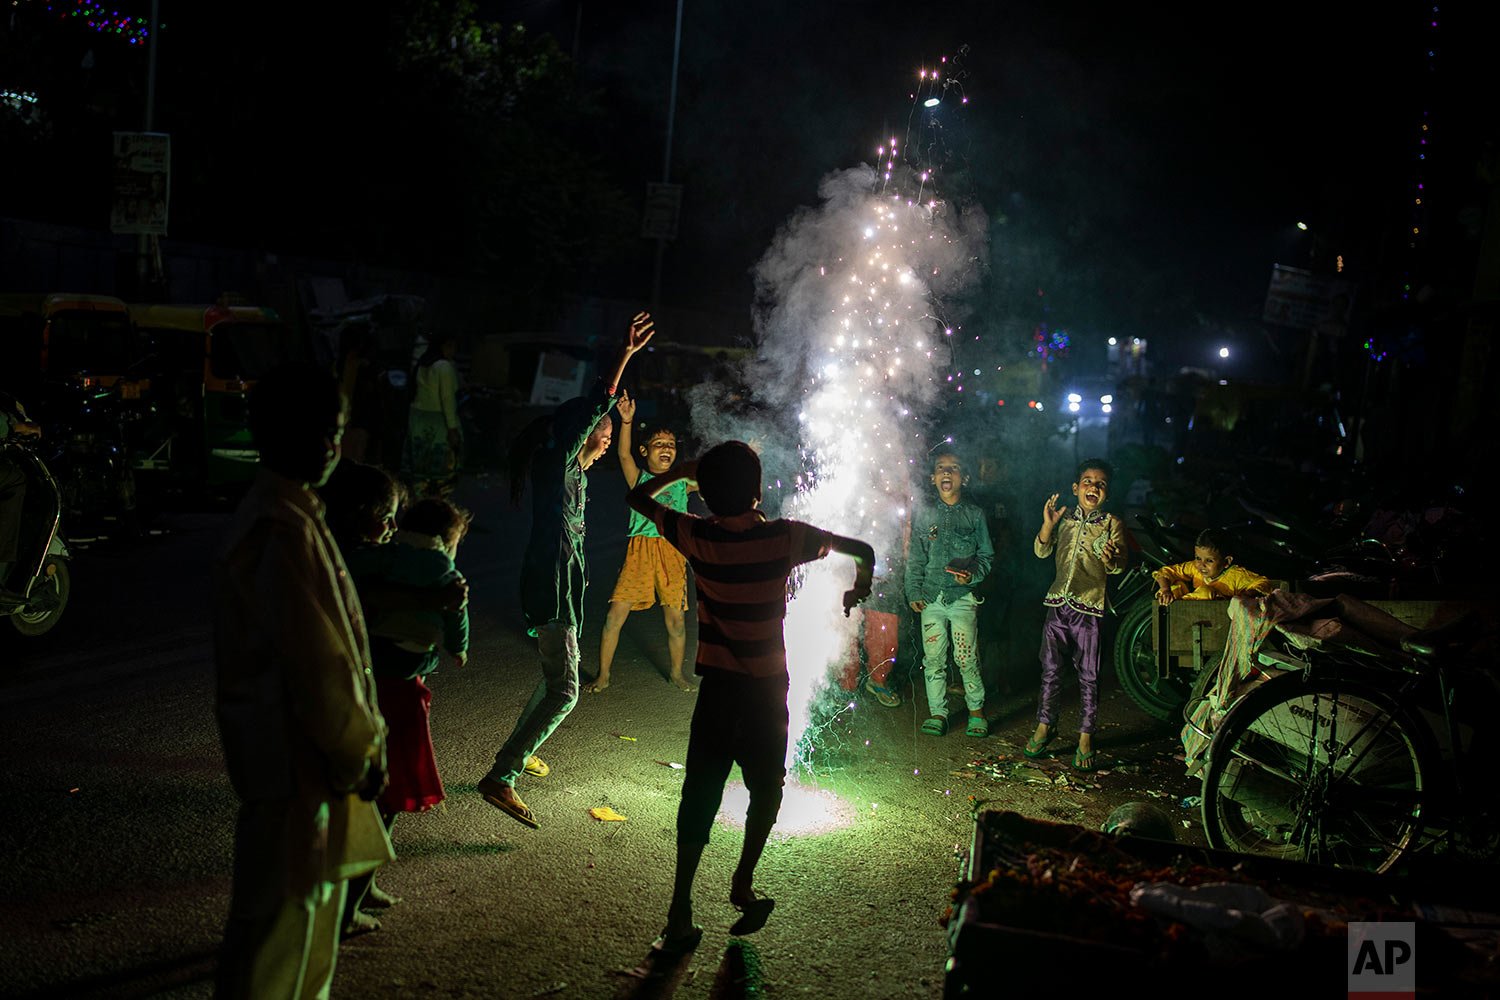  Children play with firecrackers during Diwali celebrations in New Delhi, India, Thursday, Nov. 4, 2021.  (AP Photo/Altaf Qadri) 